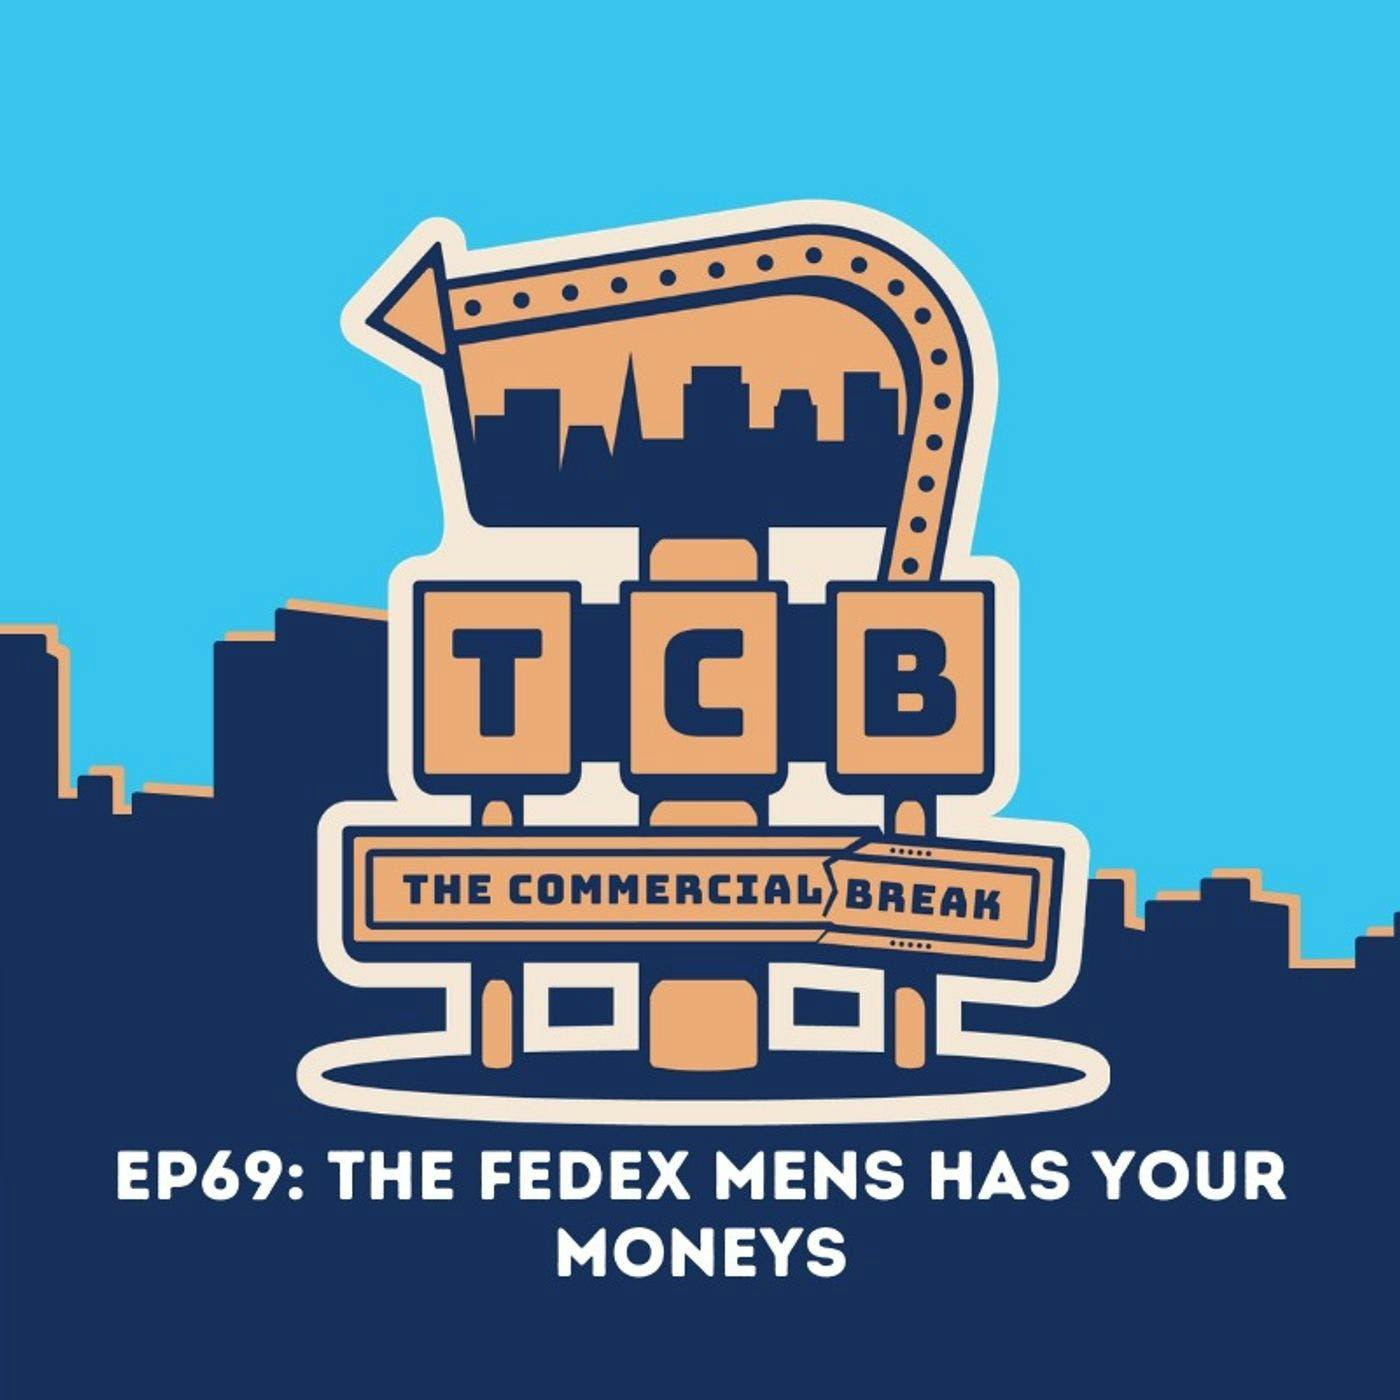 FedEx Mens Have Your Moneys!